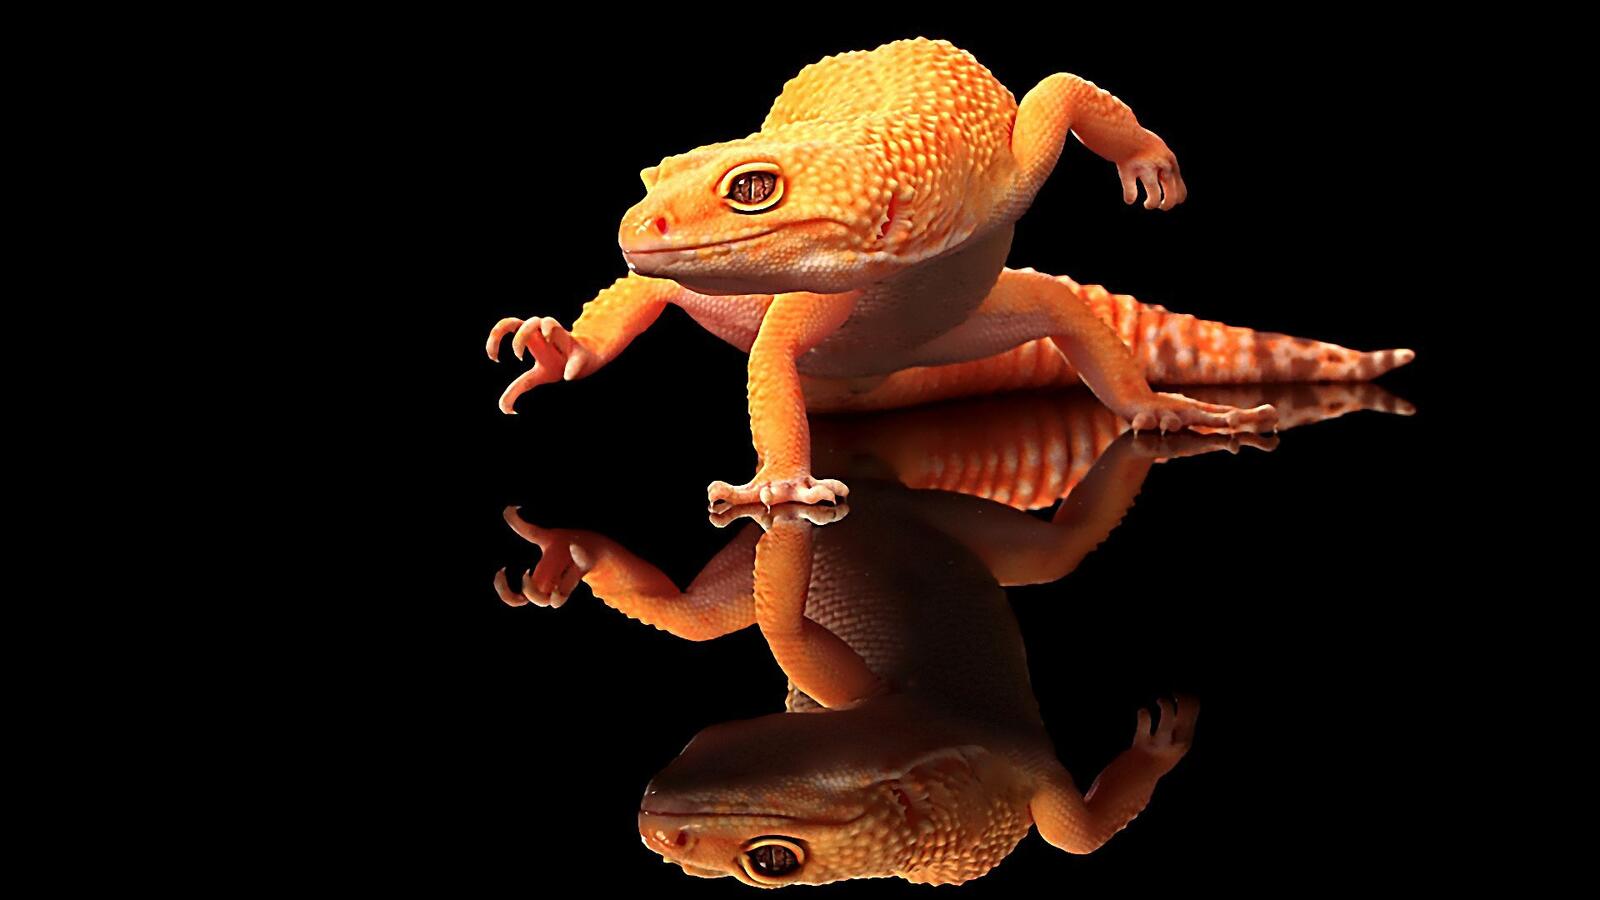 Wallpapers lizard animal geckos on the desktop